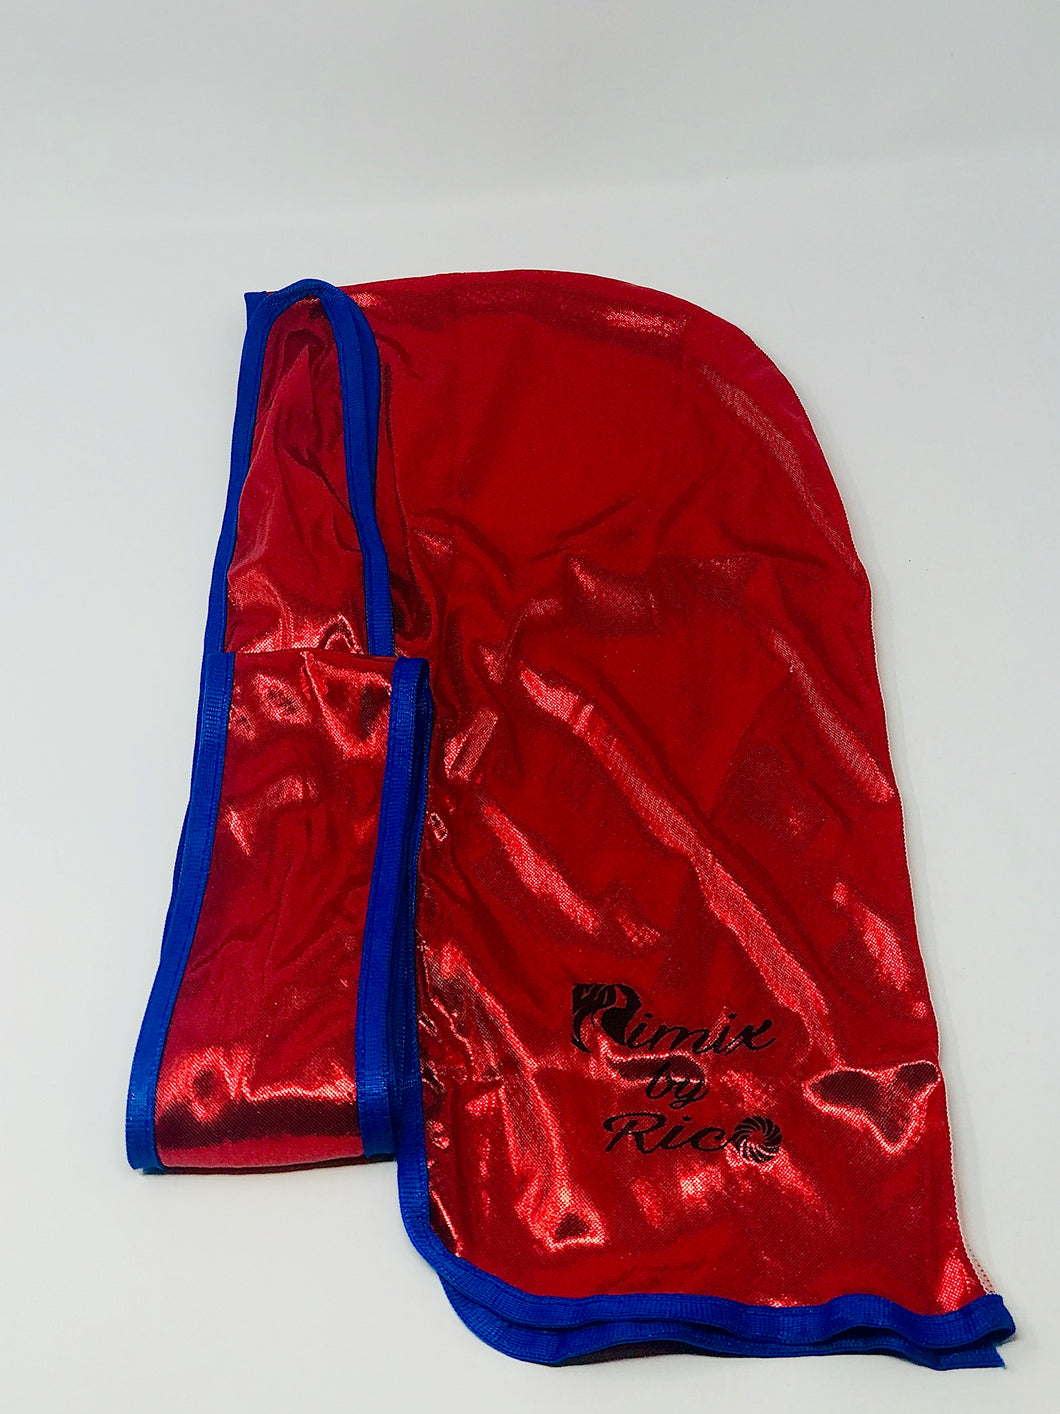 Rimix 8K Ultra Tuxedo Durag**Limited Edition - Red/Blue Trim